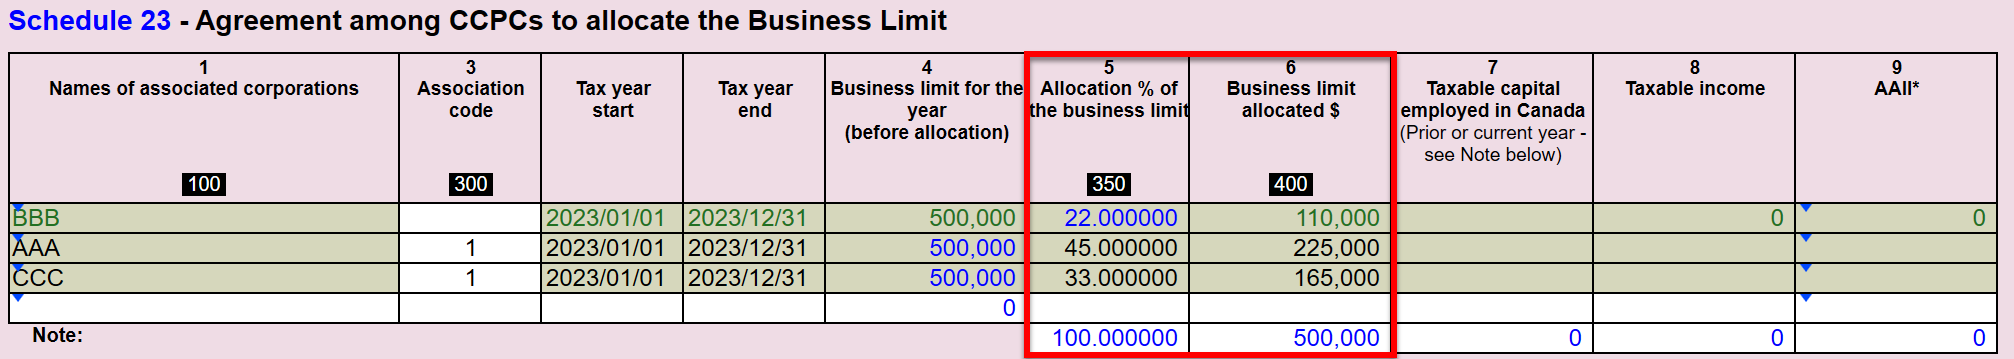 Screen Capture: Business Limit Allocation